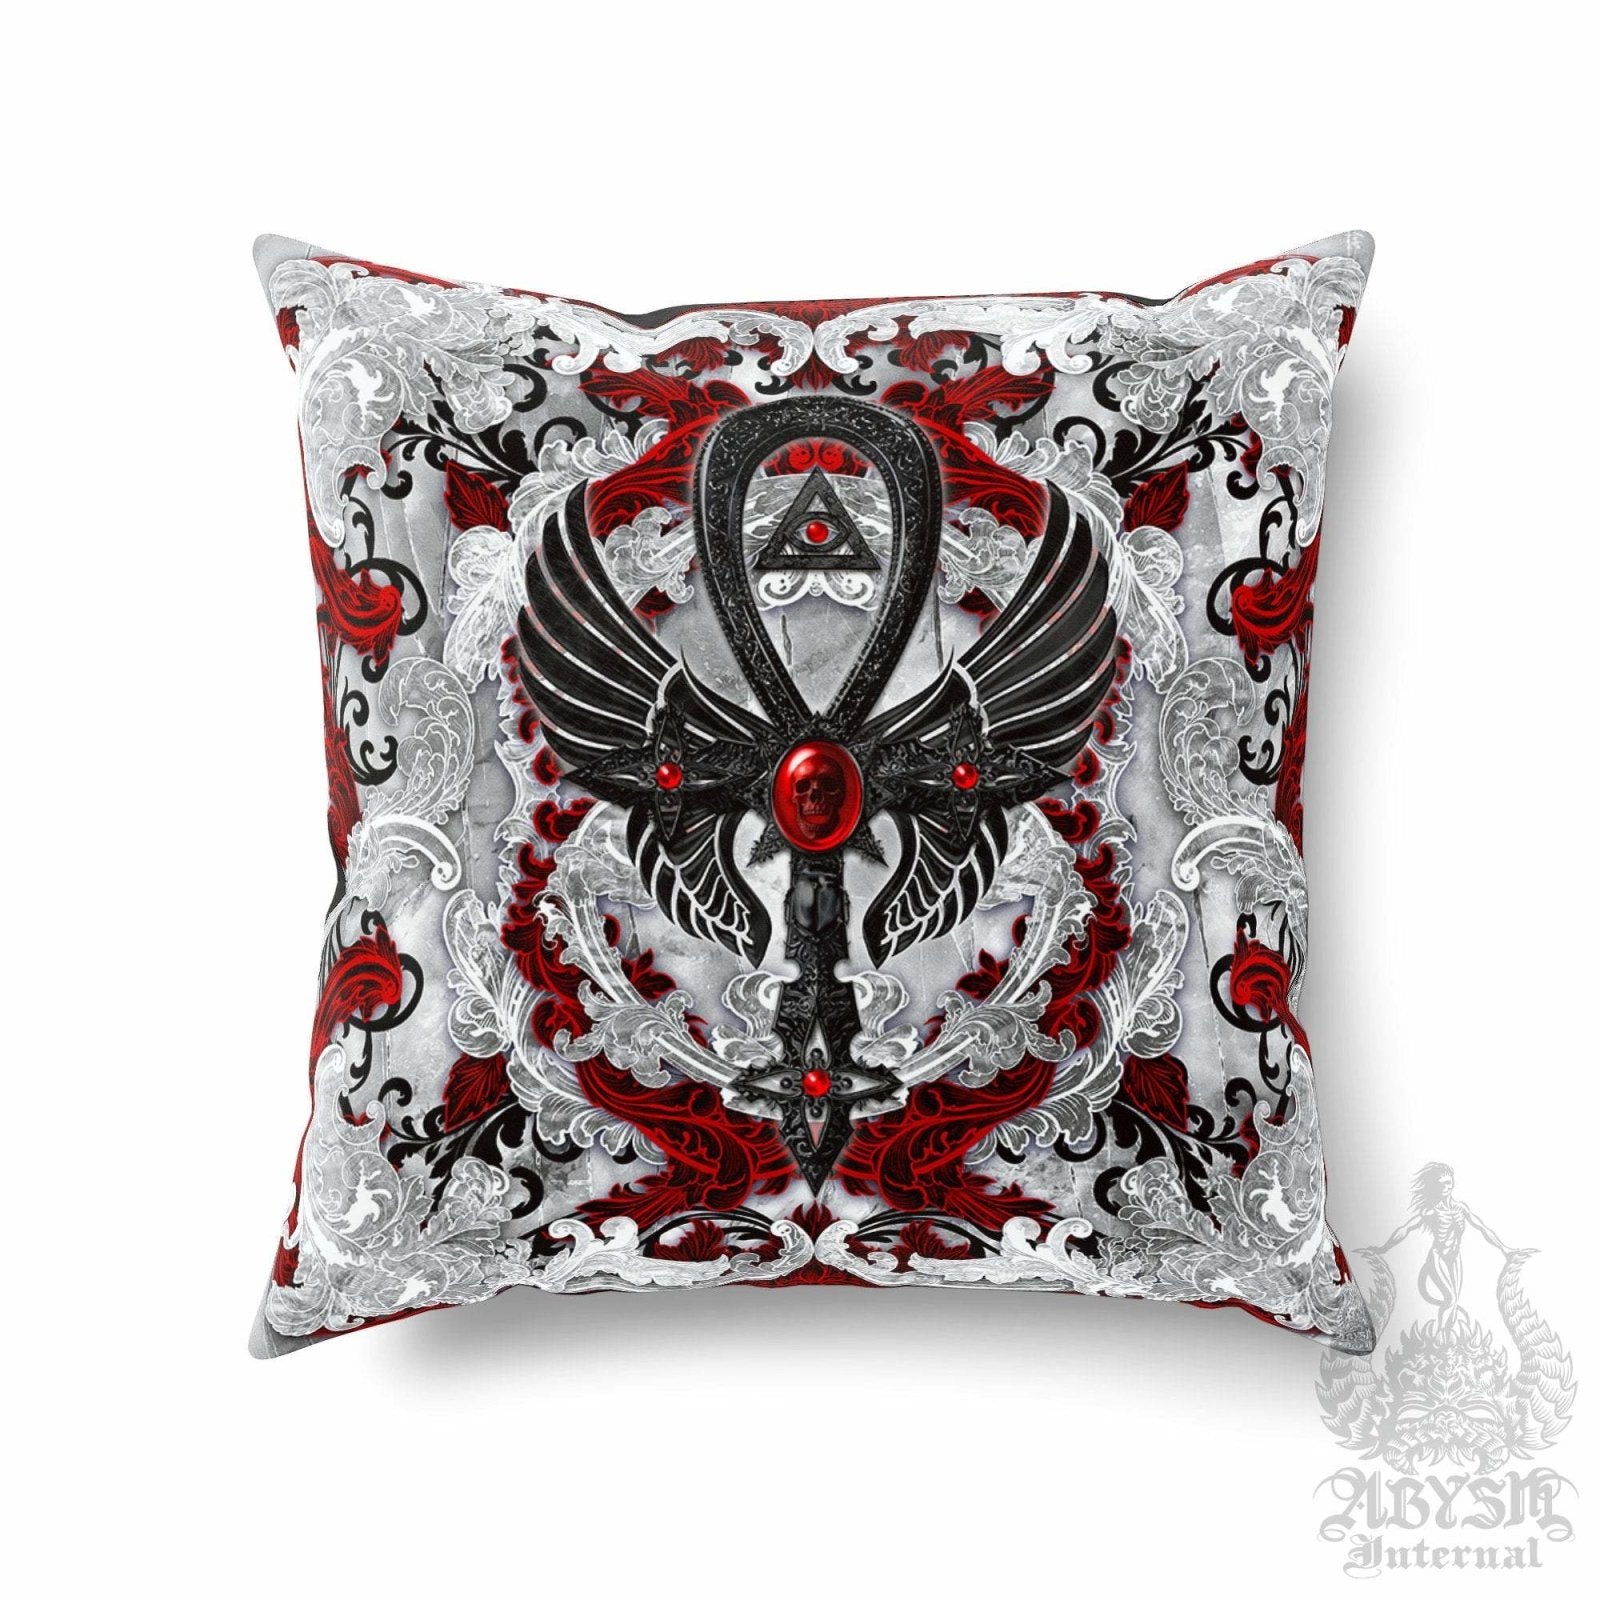 Gothic Throw Pillow, Decorative Accent Cushion, White Goth Room Decor, Dark Art, Alternative Home - Ankh Cross, Bloody Black - Abysm Internal